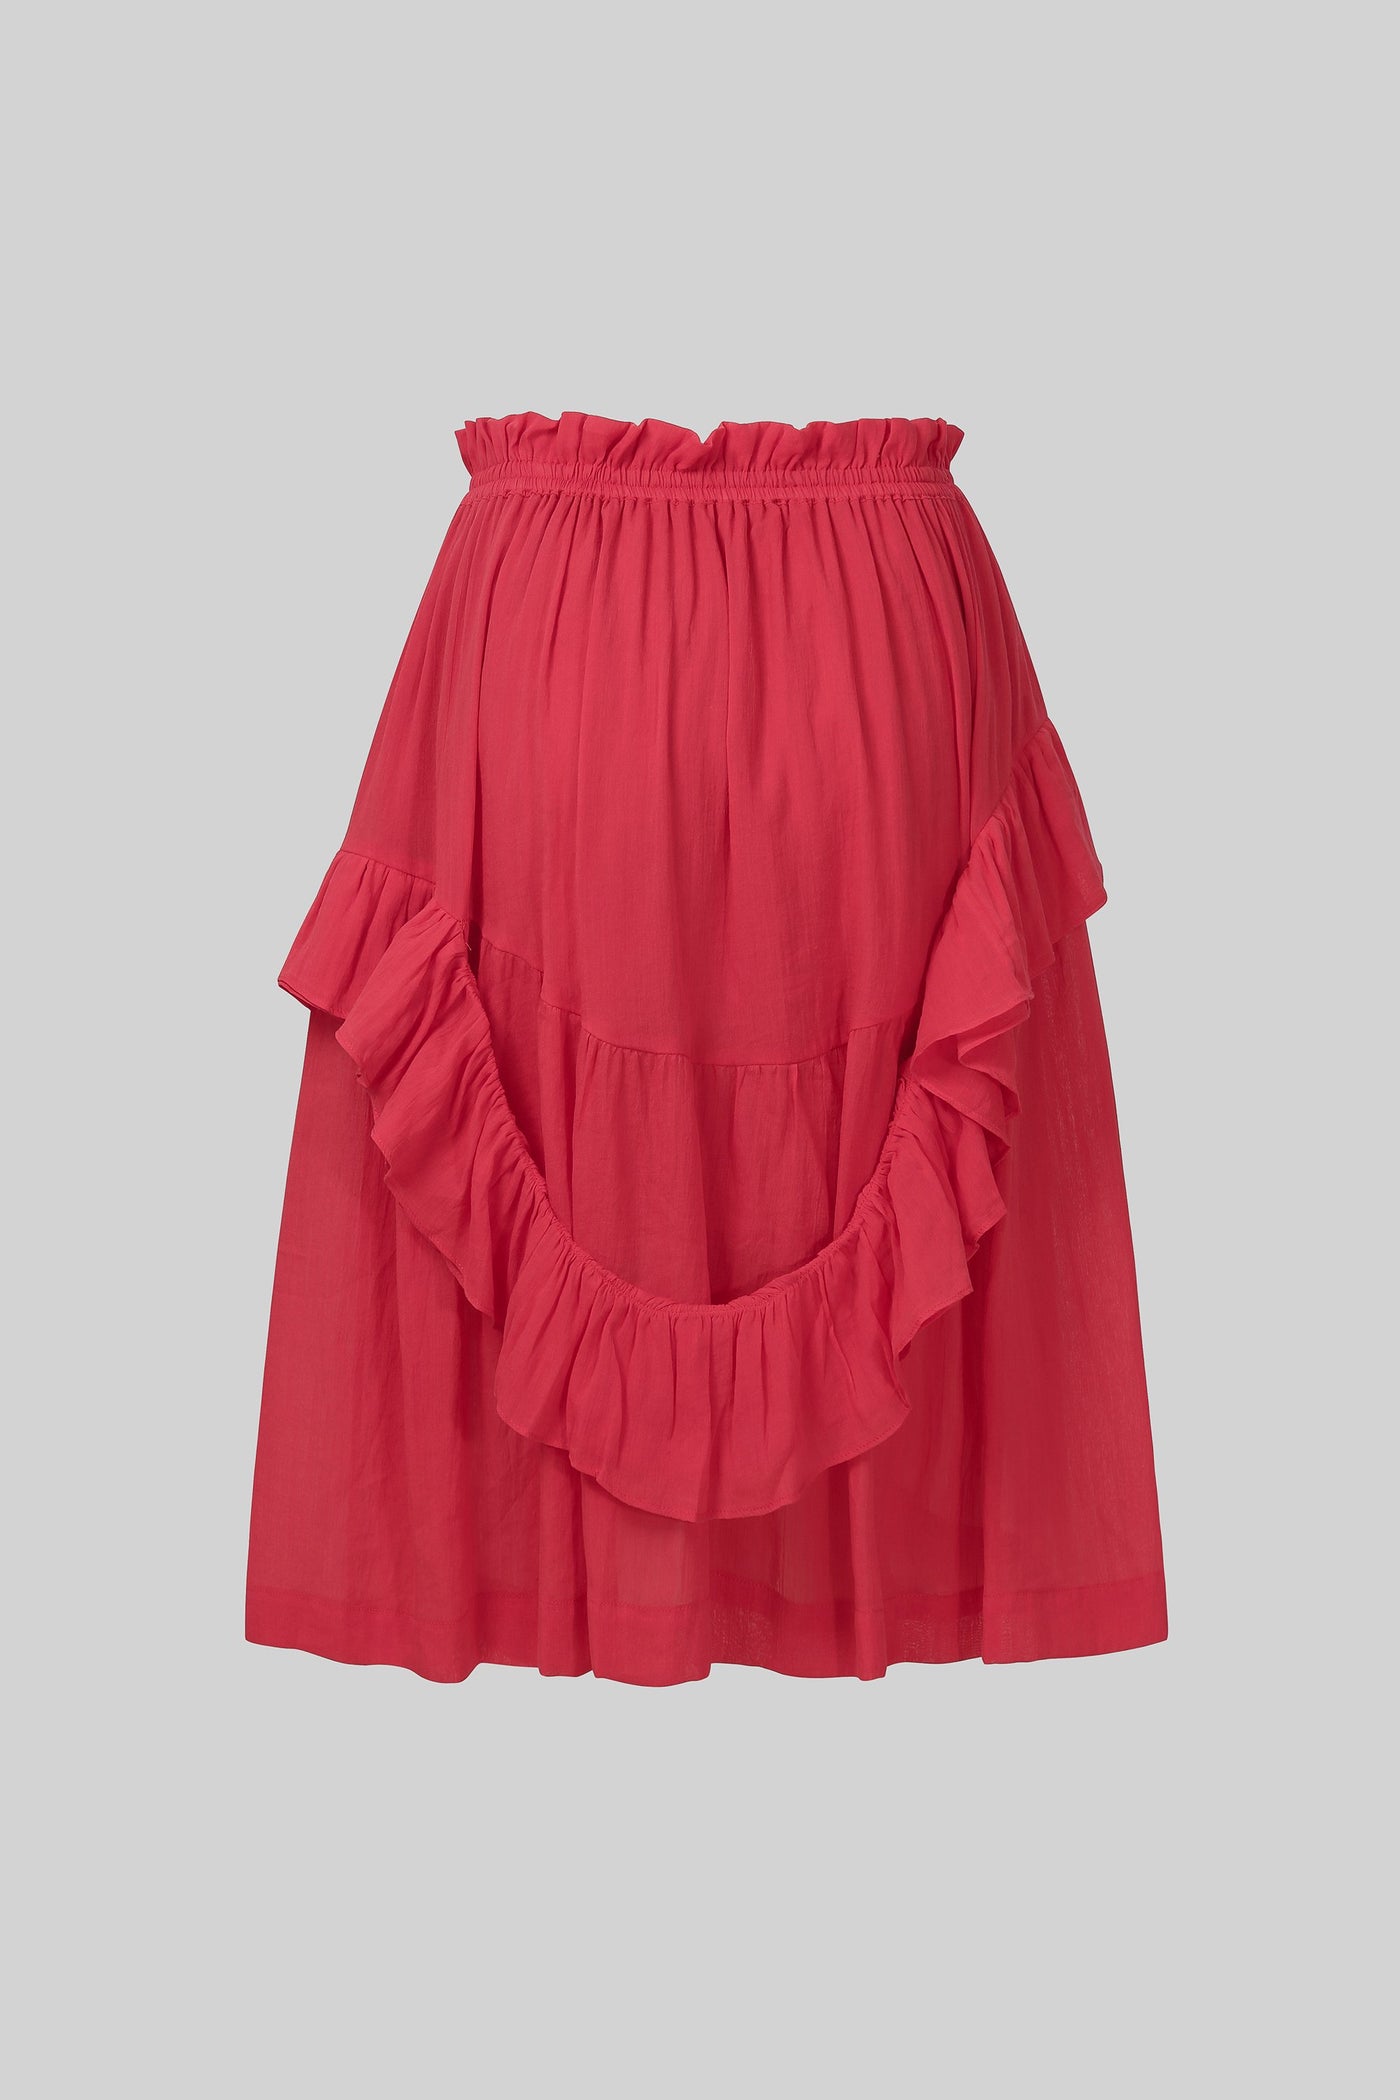 Tulip 03 | bud skirt